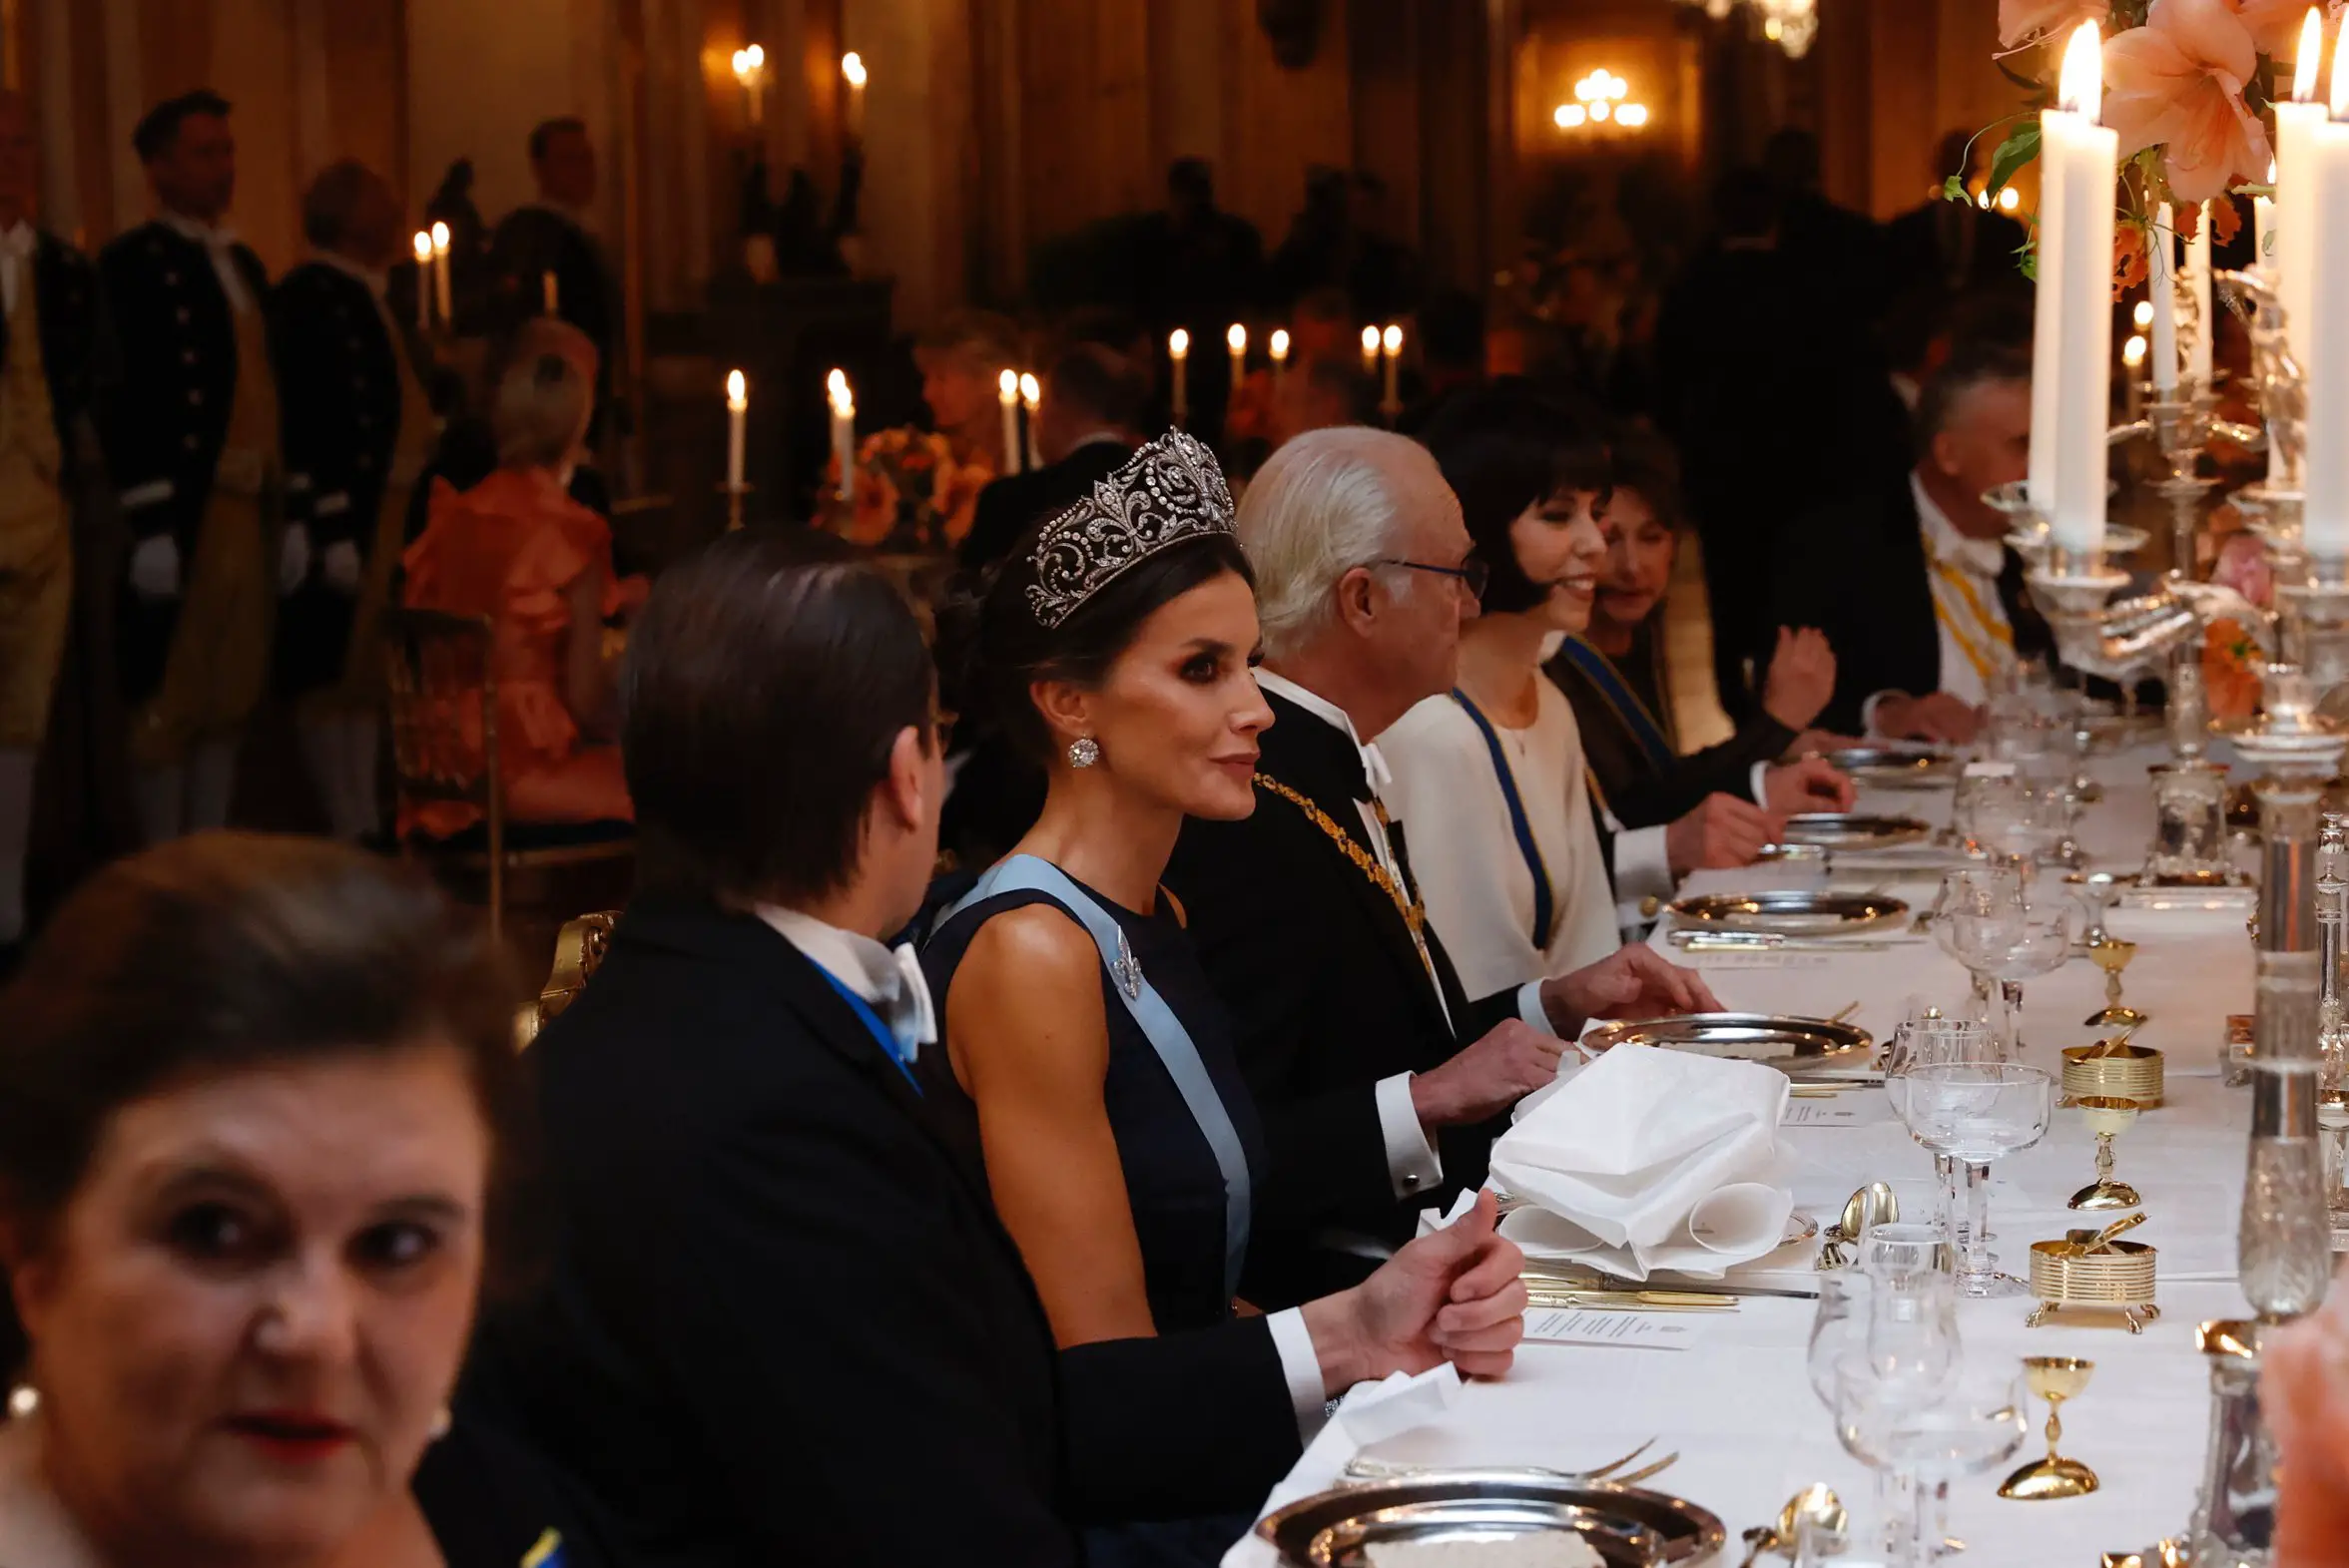 Queen Letizia was sitting beside King Carl Gustav and Prince Daniel